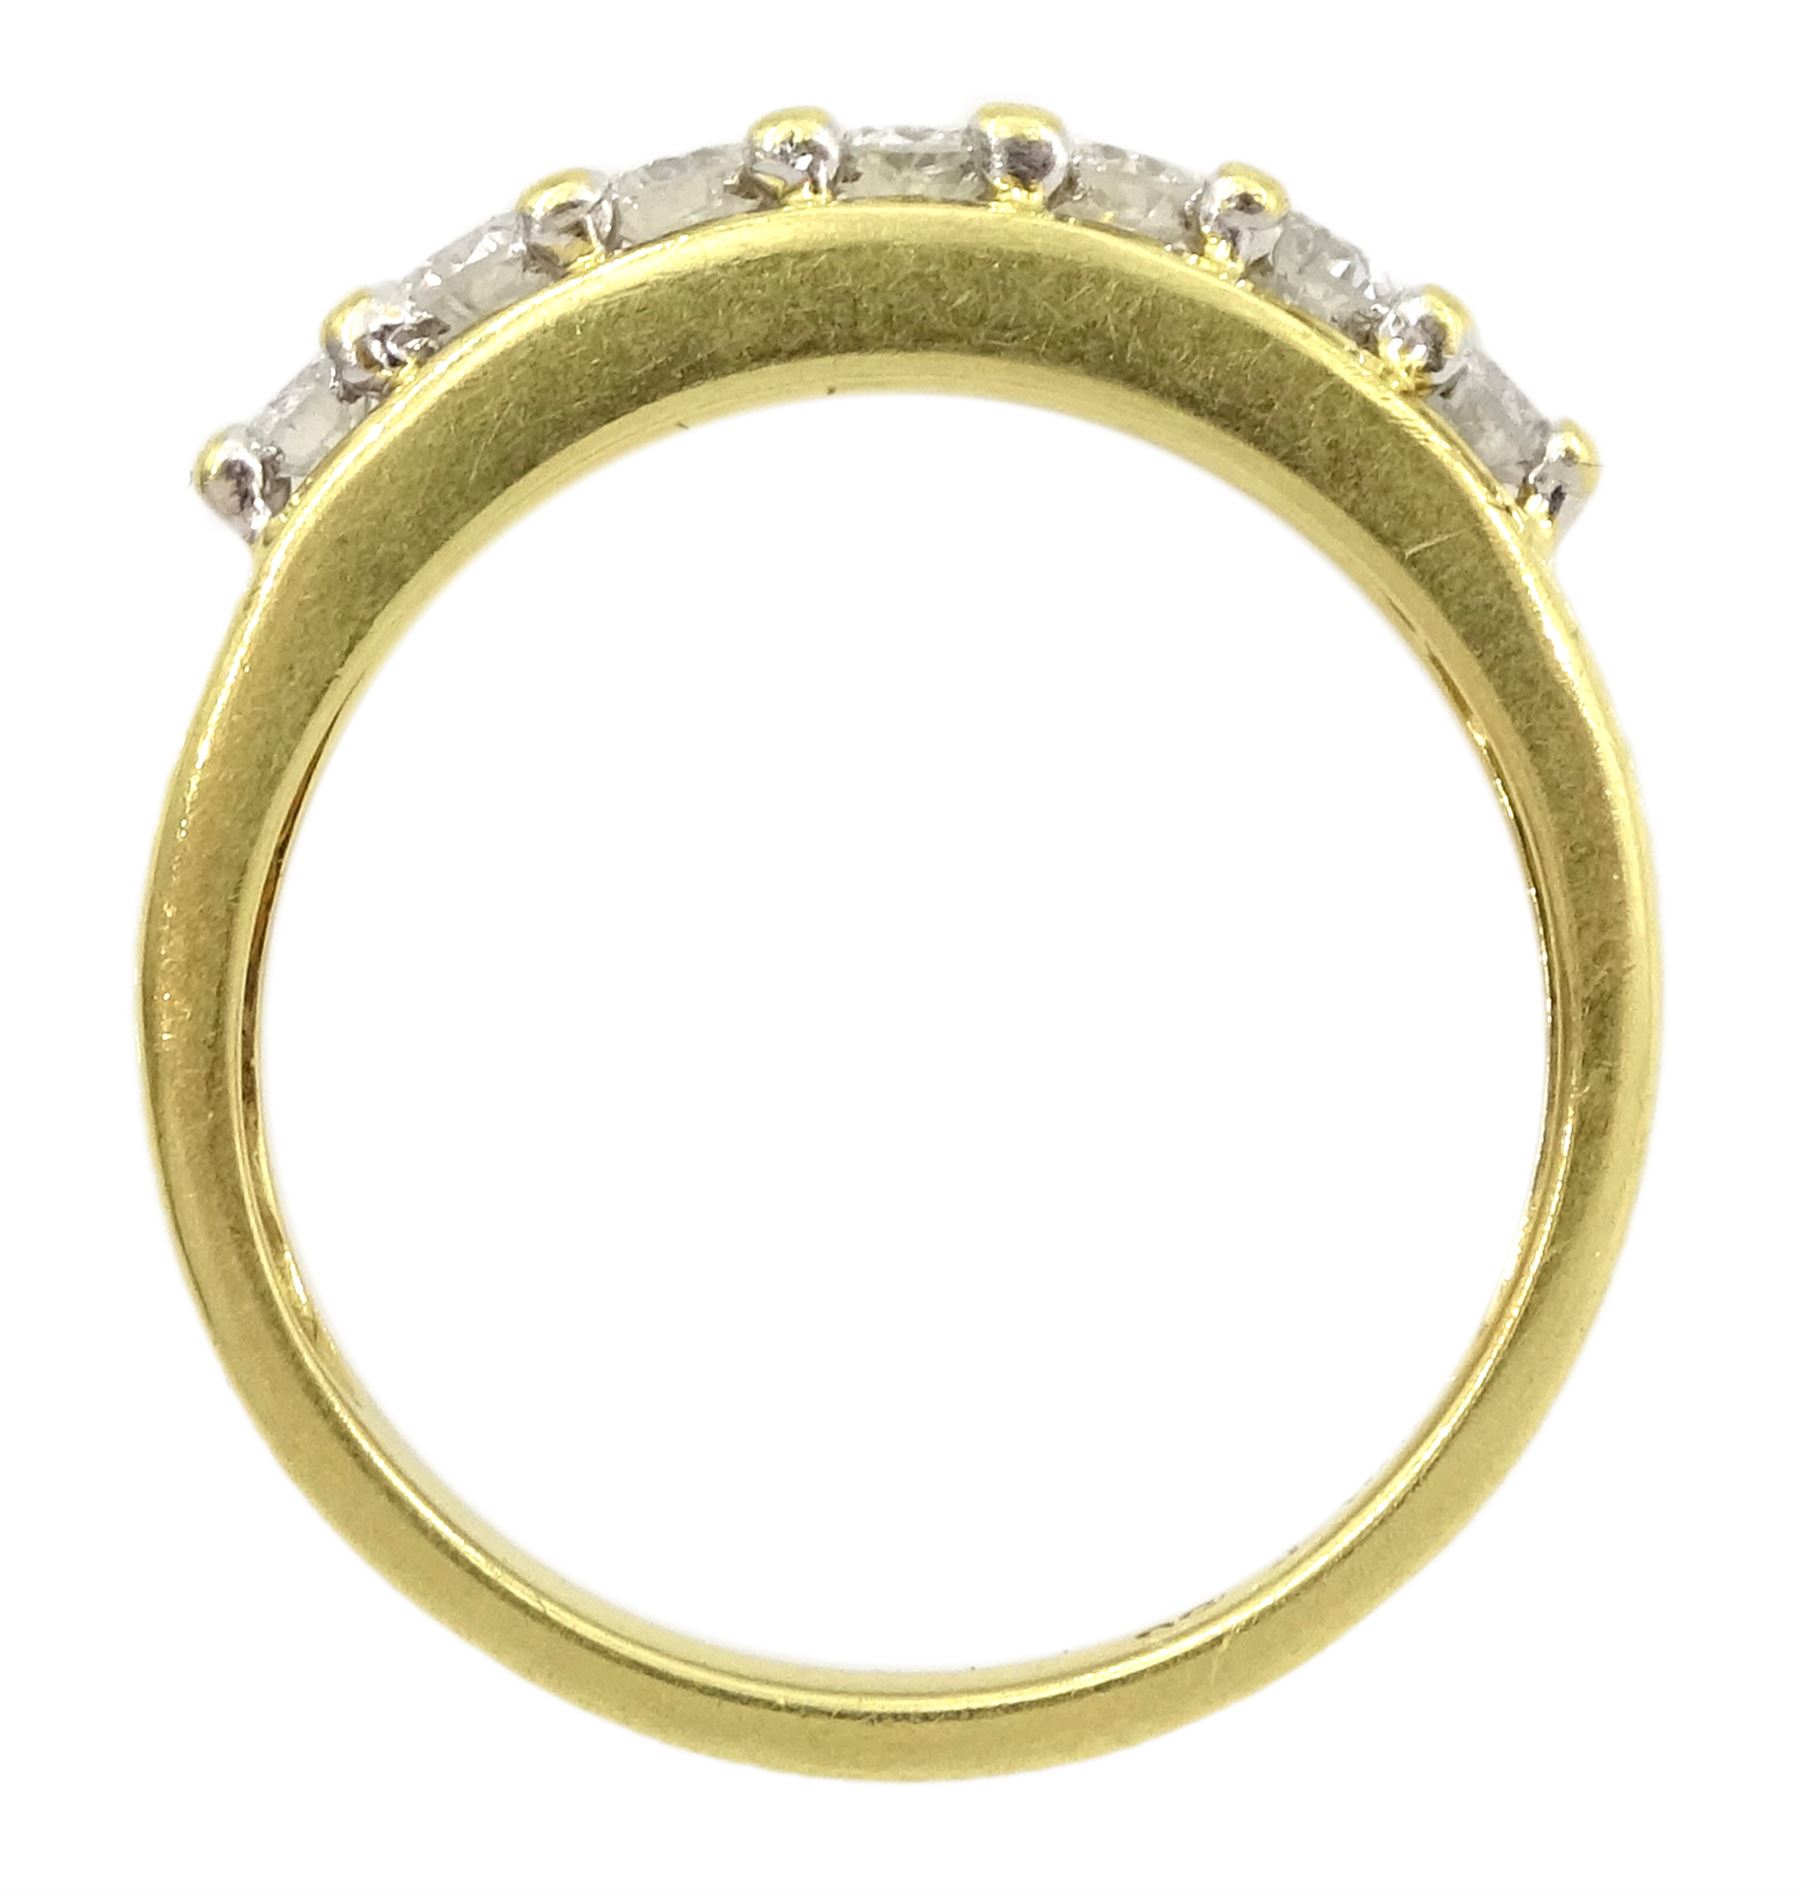 18ct gold seven stone round brilliant cut diamond ring - Image 4 of 4